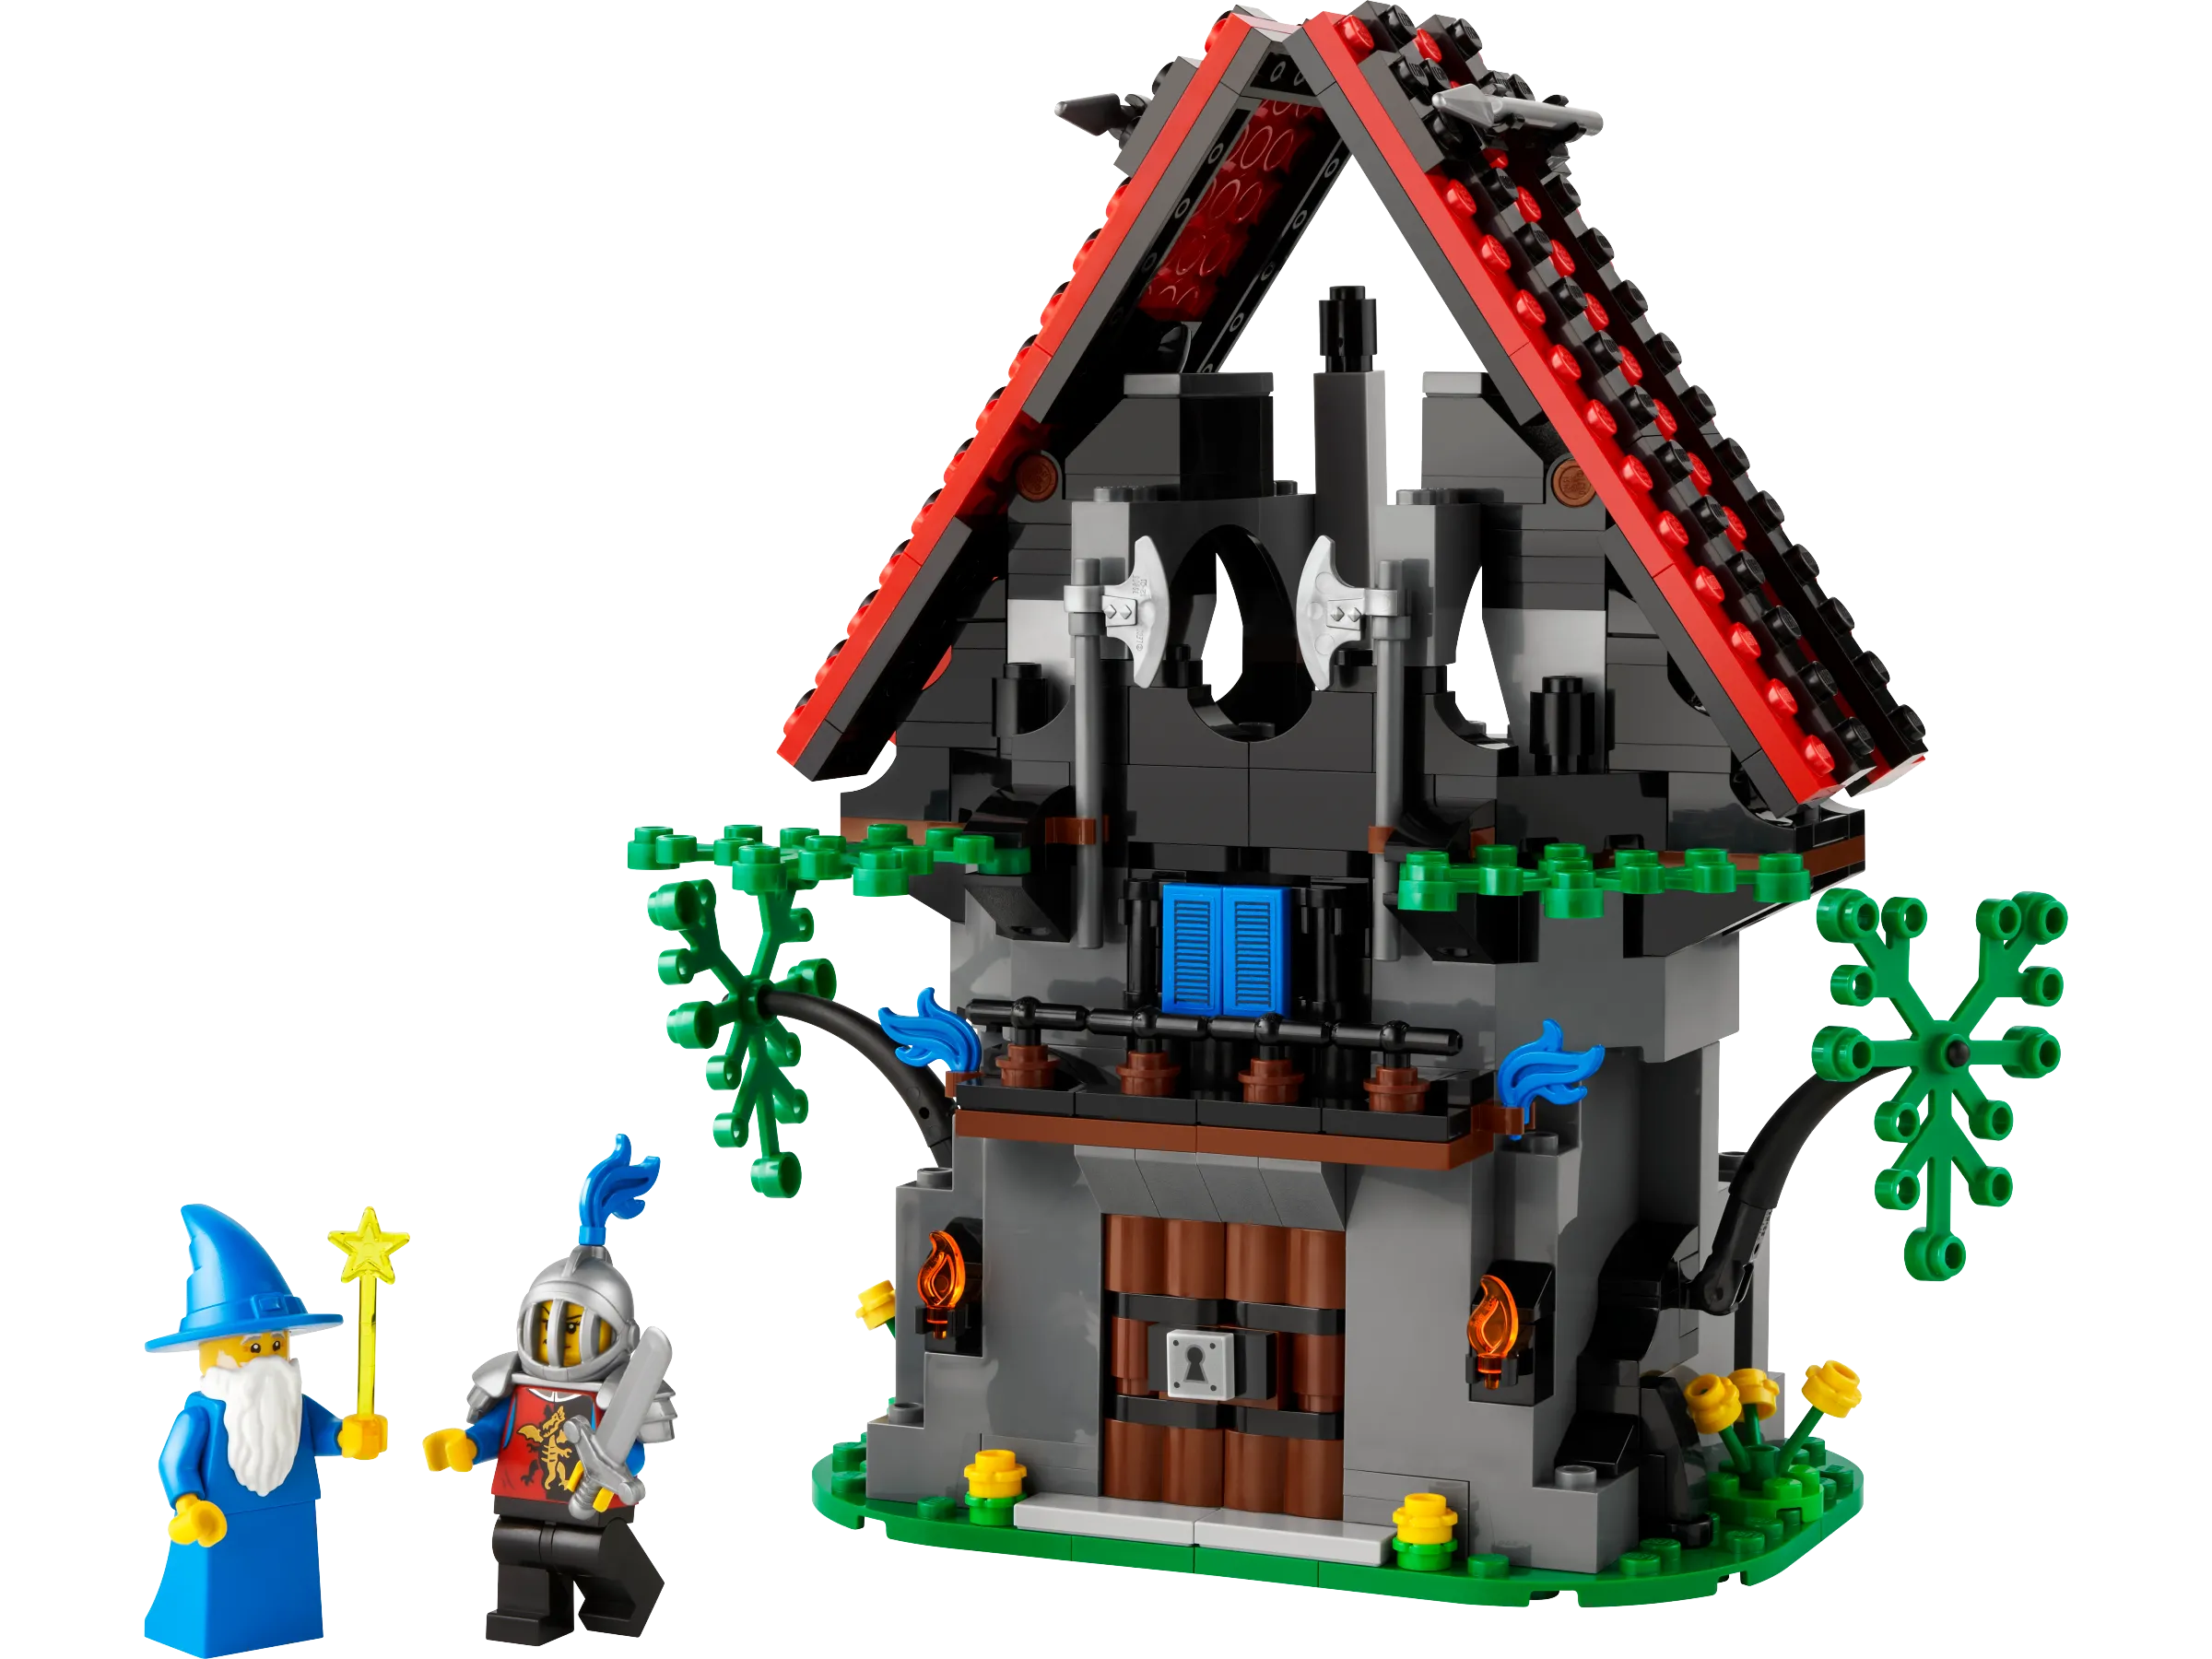  LEGO Castle Tower Raid : Toys & Games